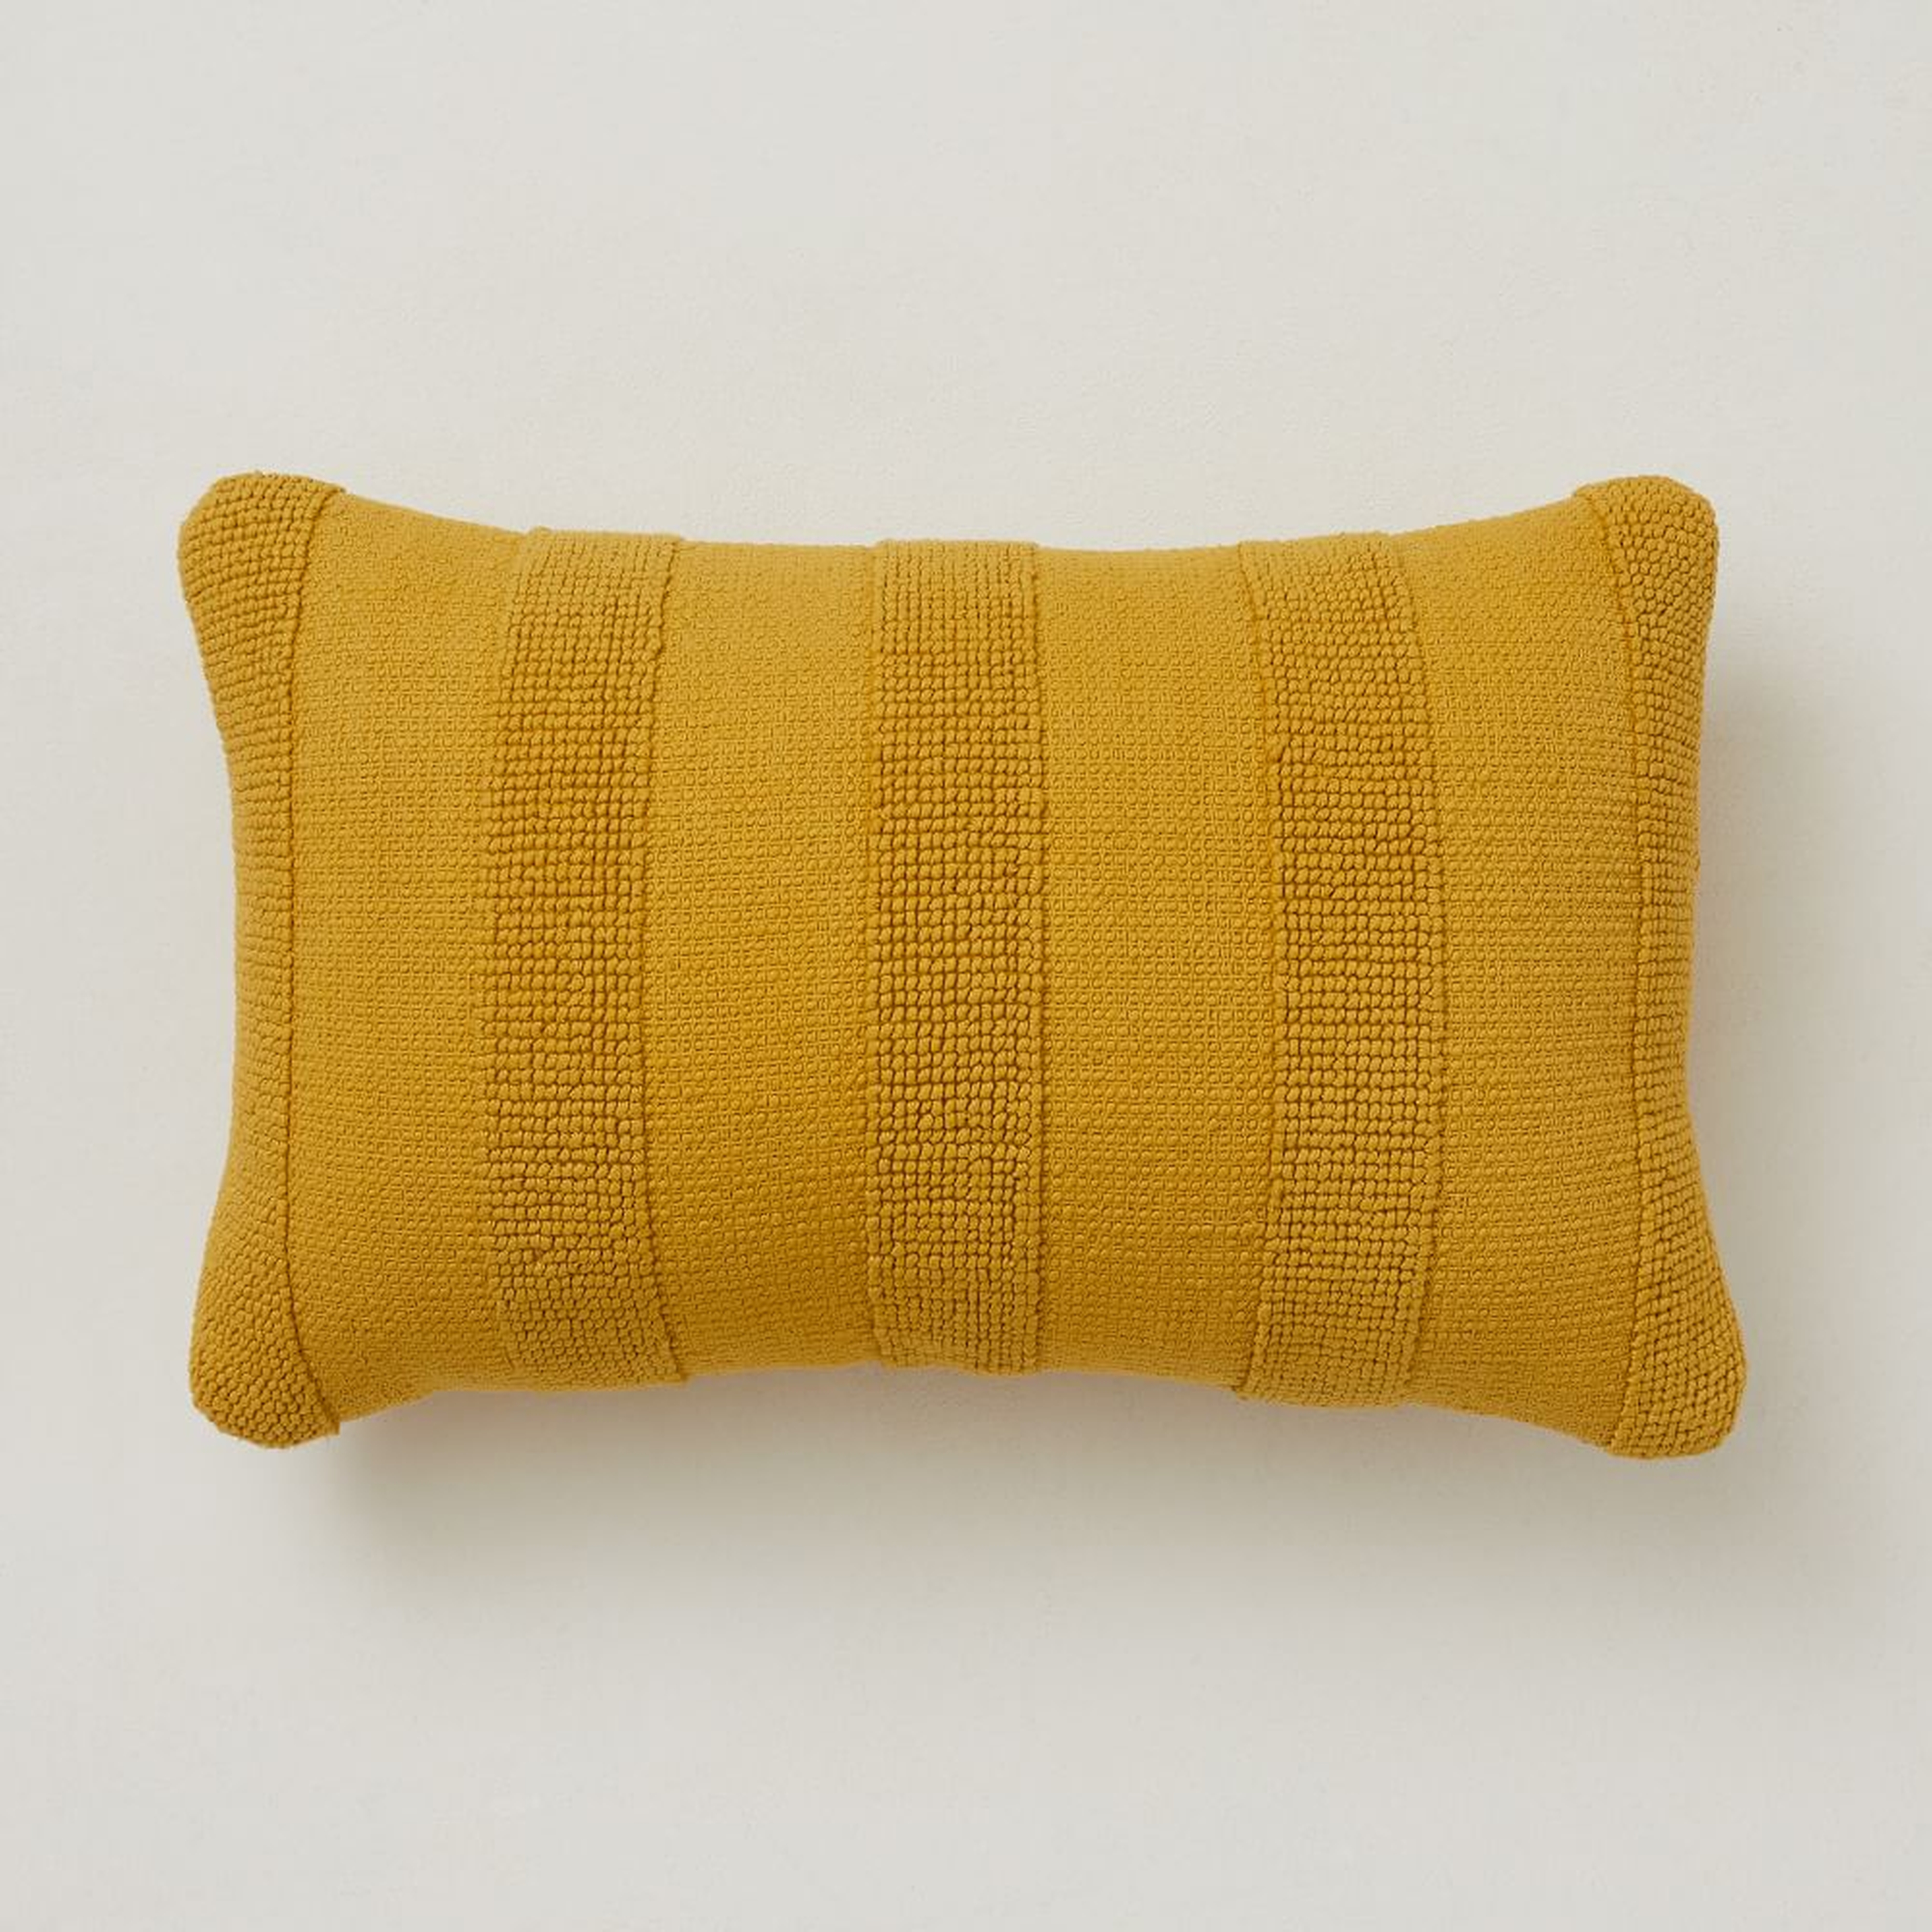 Outdoor Tufted Stripe Pillow, 12"x21", Dark Horseradish - West Elm